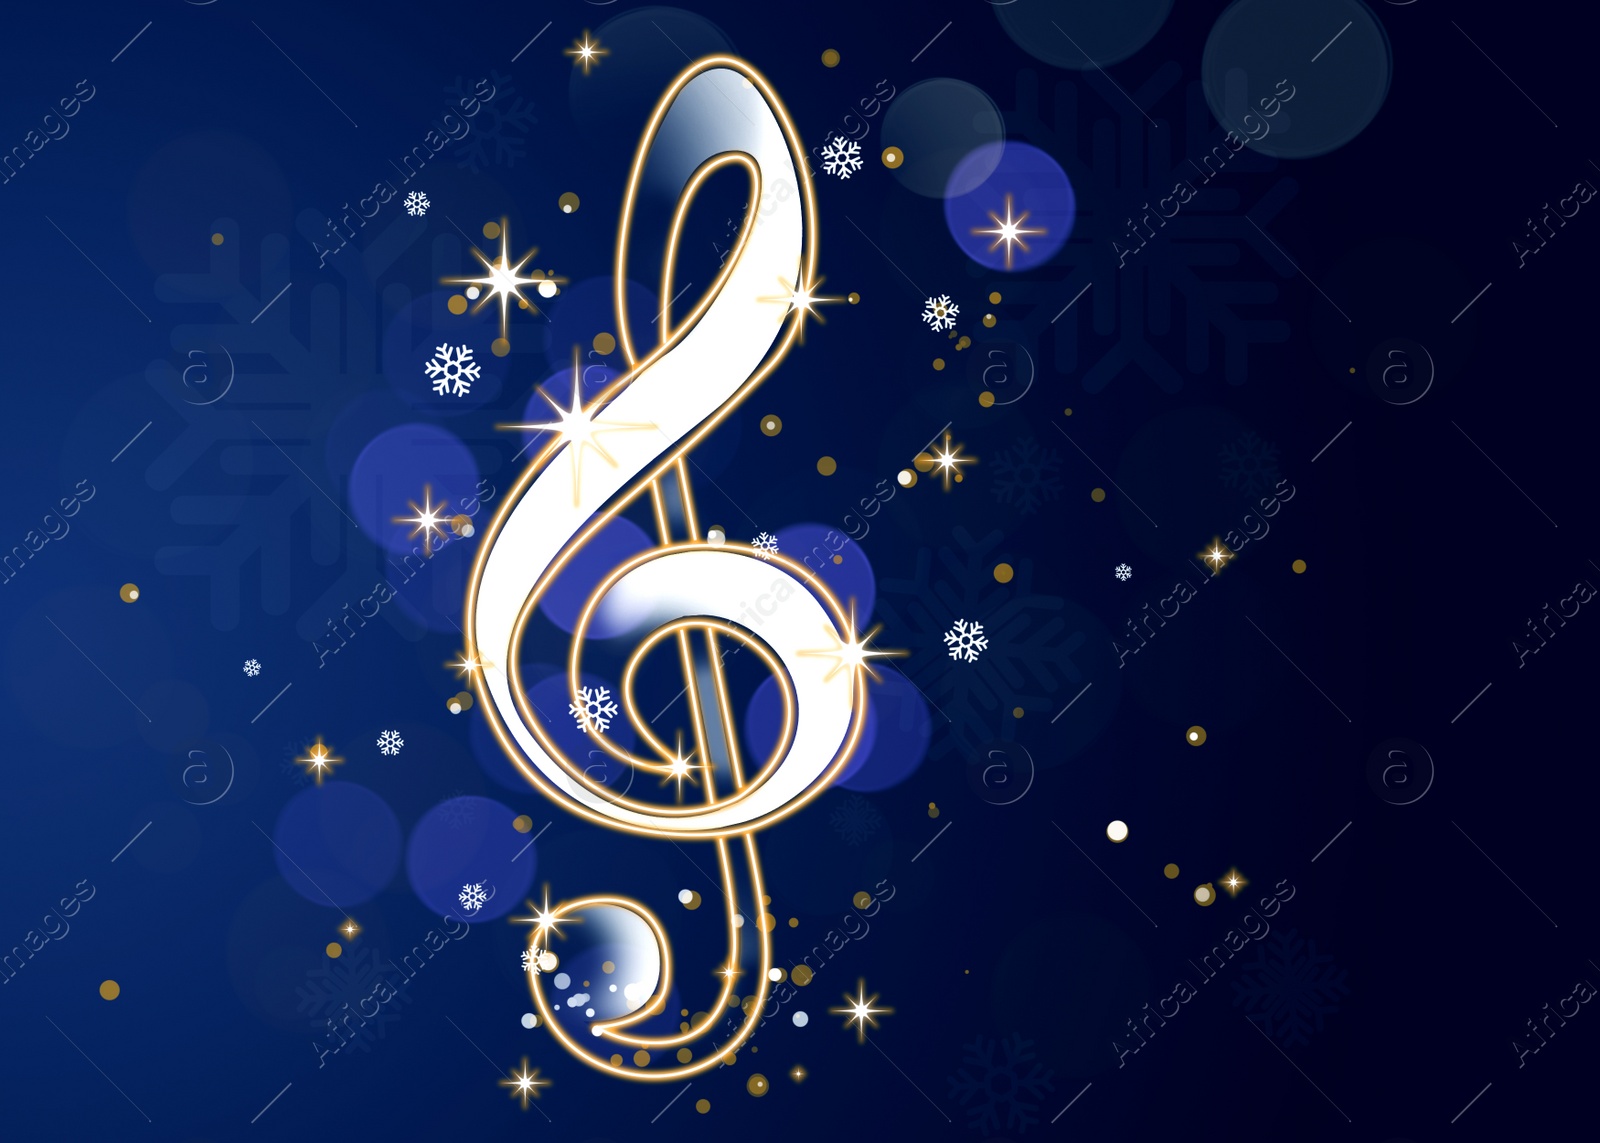 Illustration of Christmas music. Treble clef and snowflakes on blue background. Illustration design